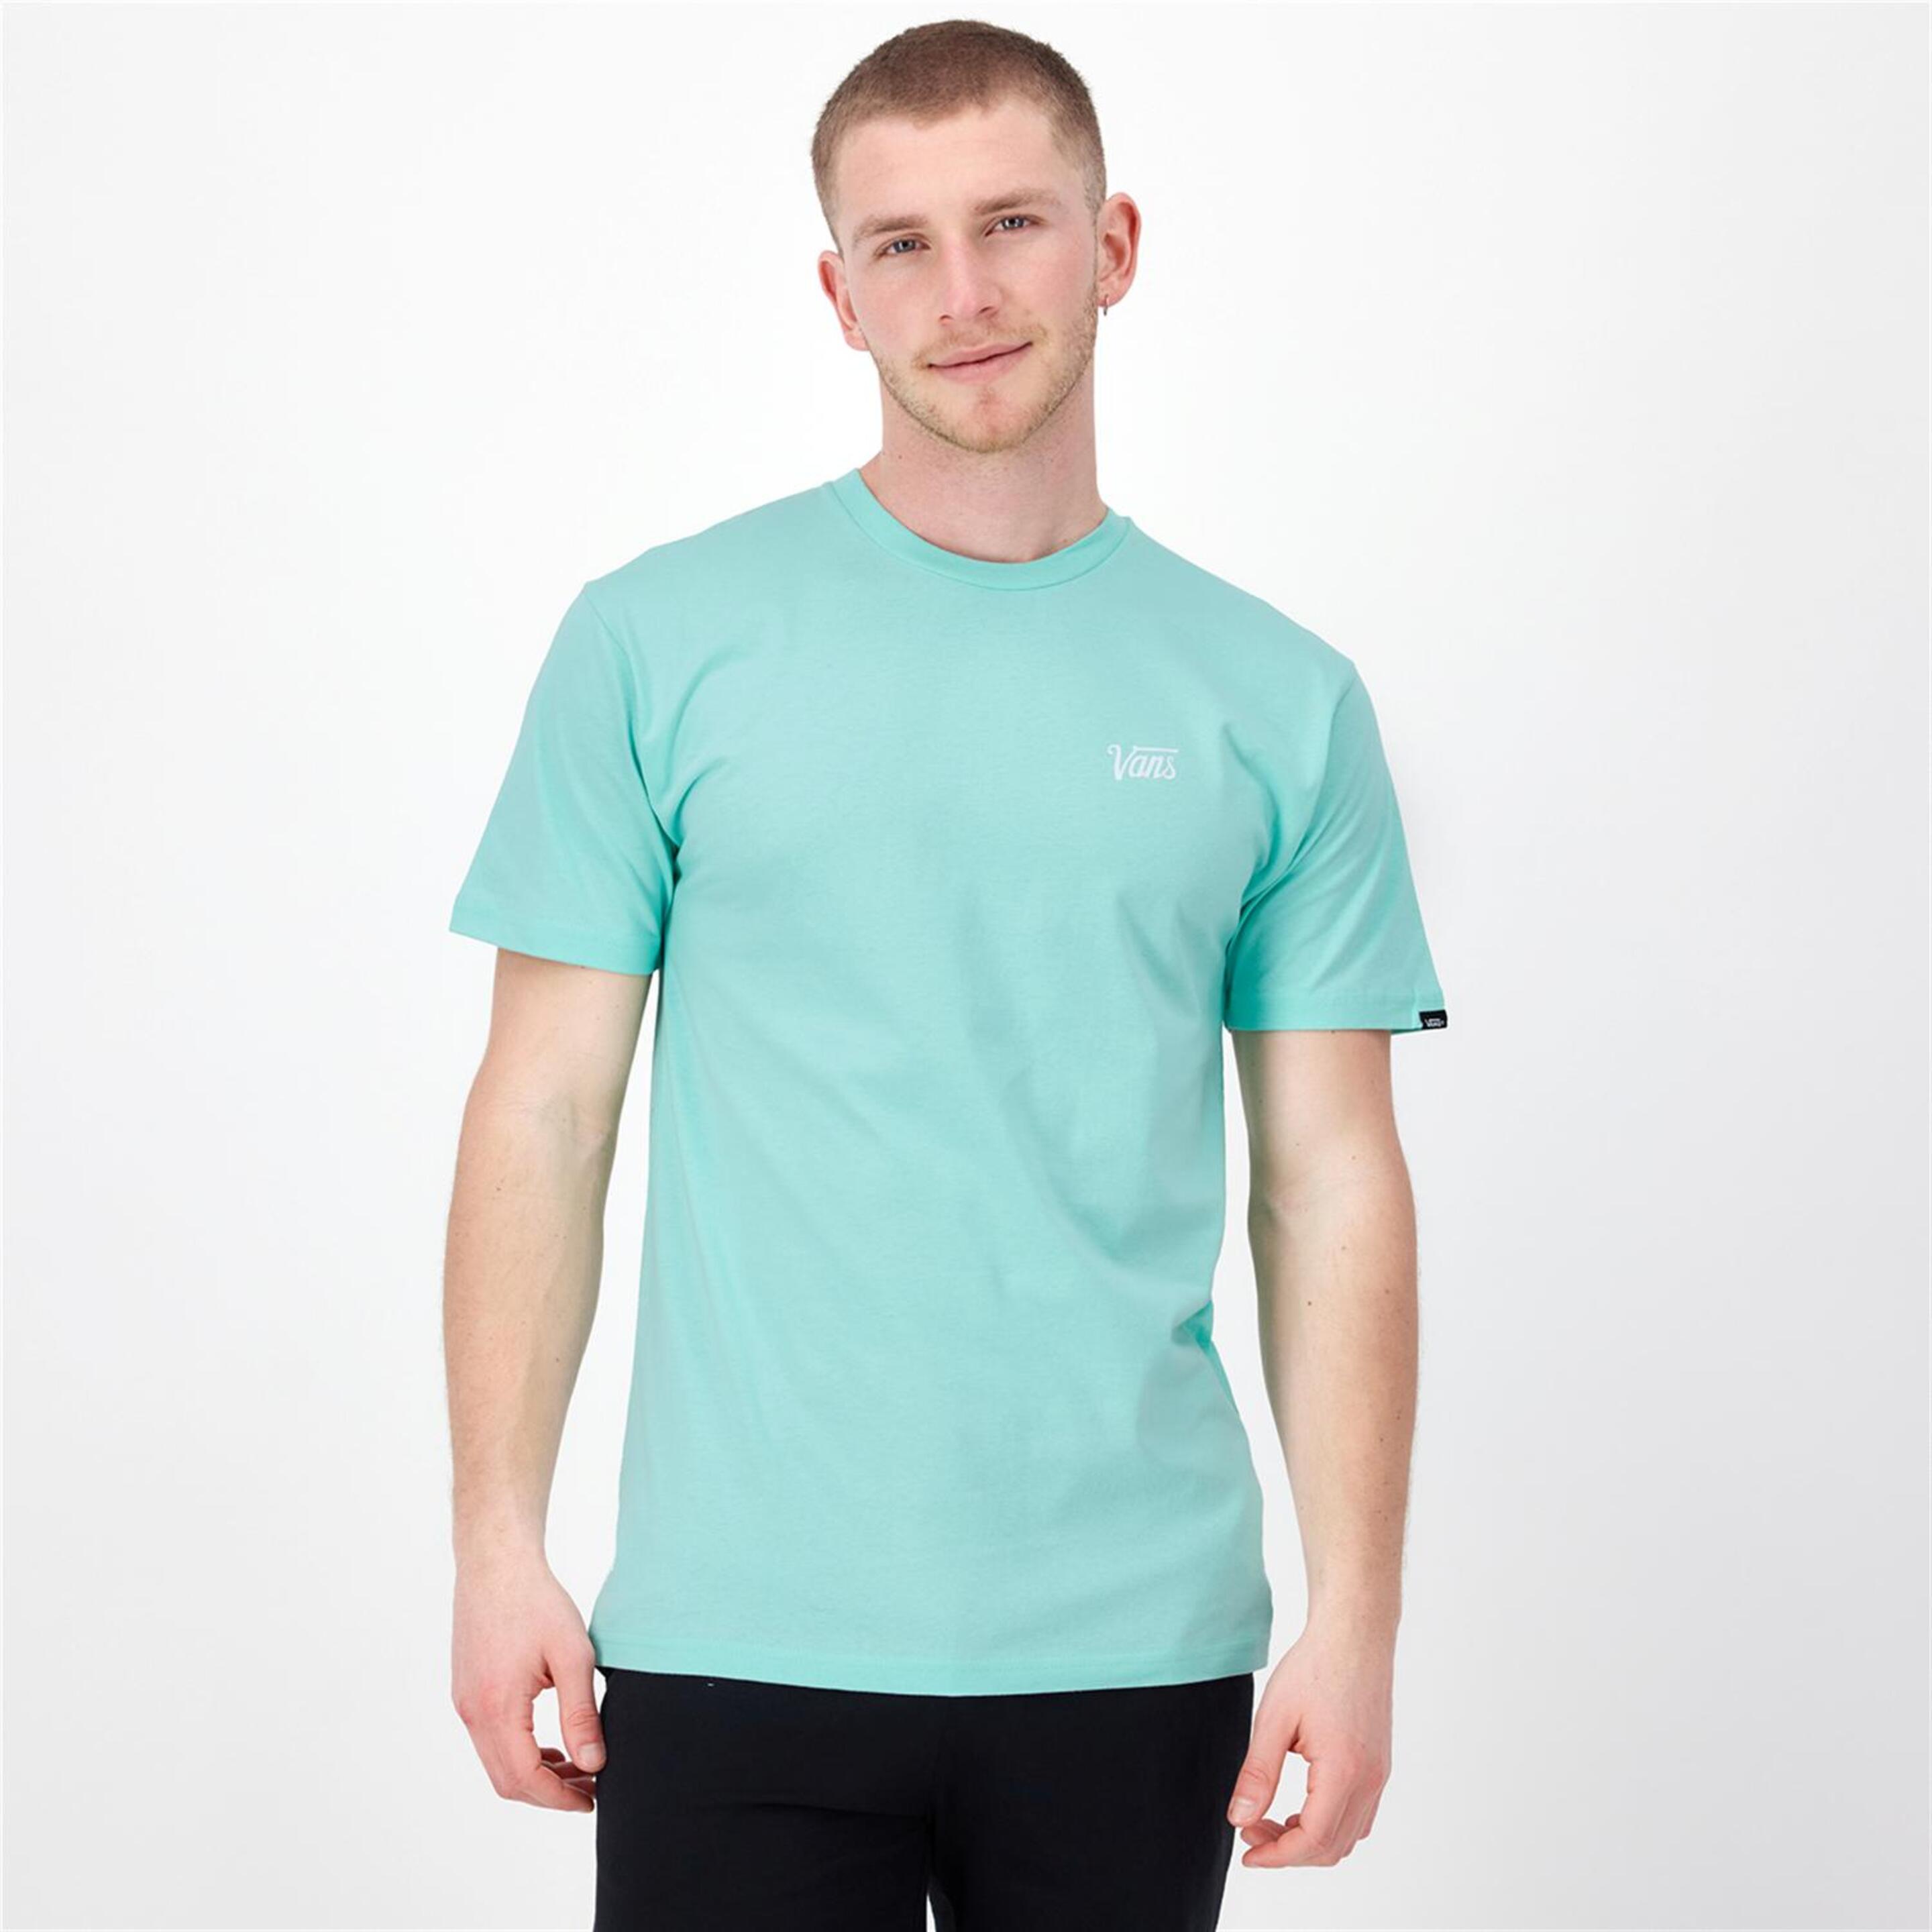 Vans Small Logo - azul - T-shirt Homem